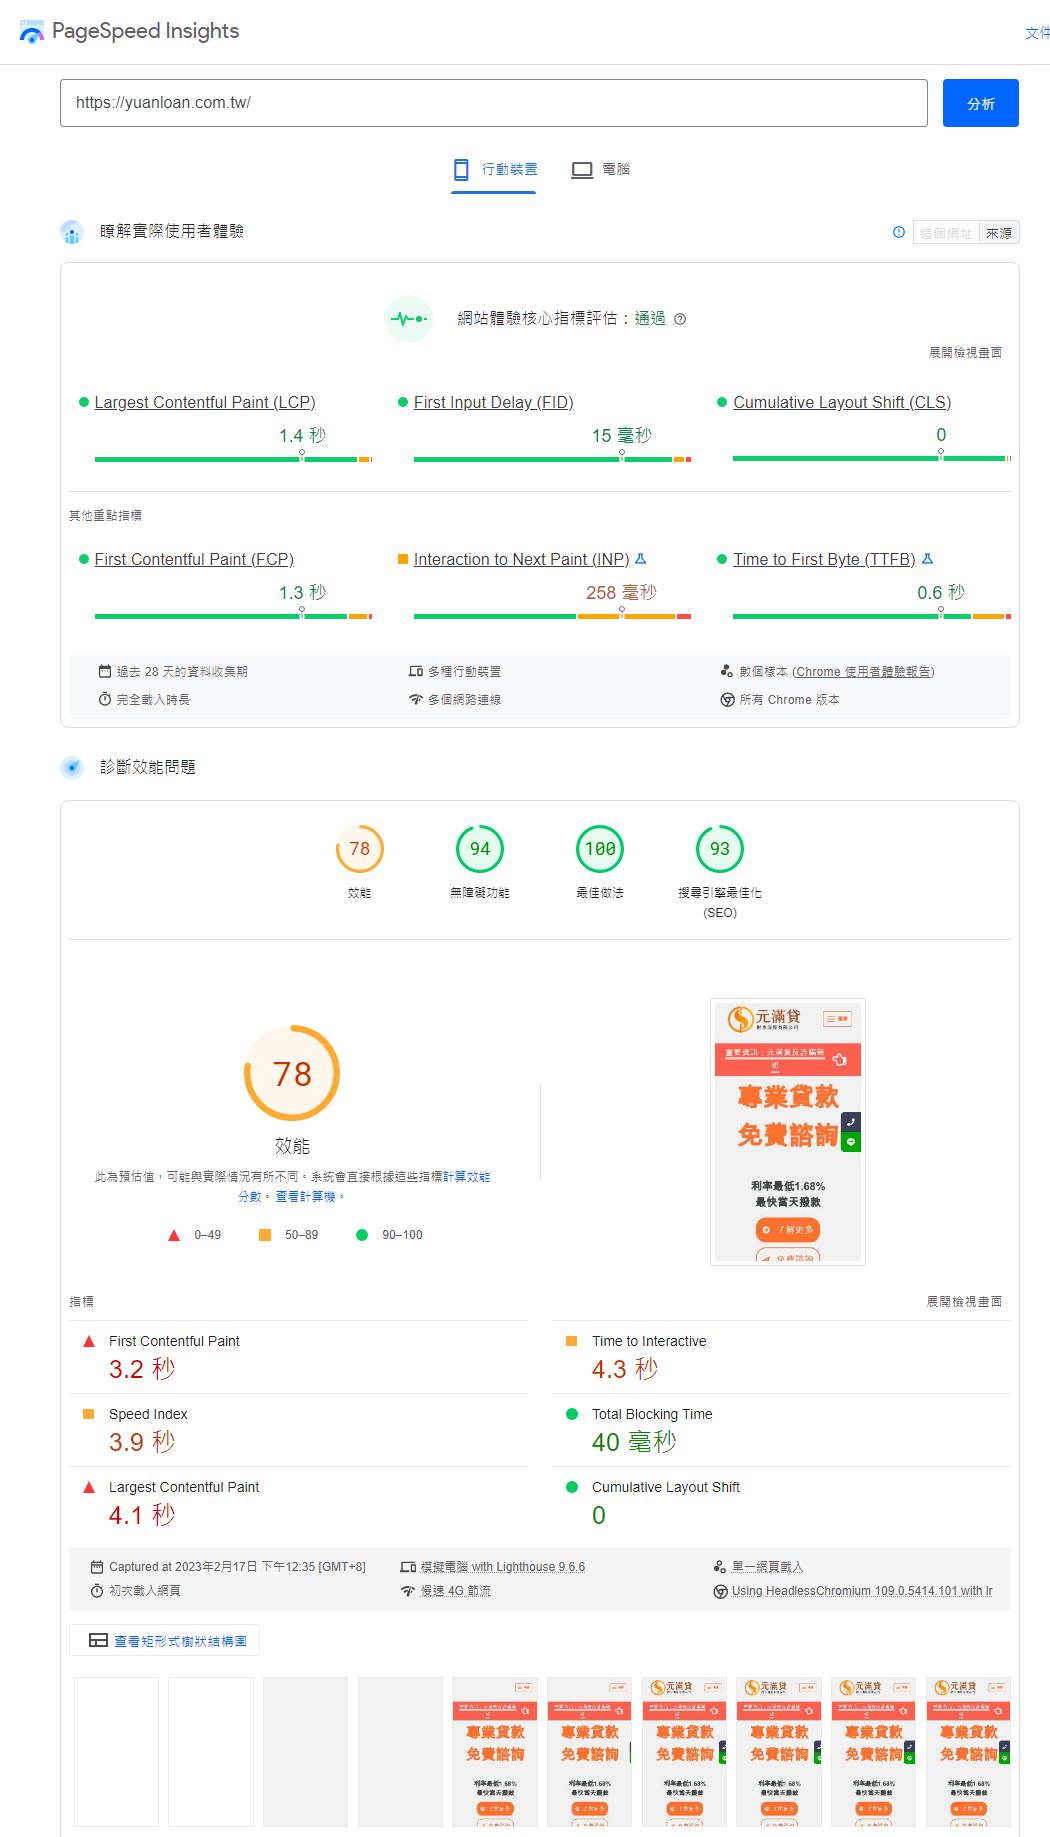 yuanloan.com.tw 元滿貸 - 230217 PageSpeedInsight 行動版檢測報告 & Web Core Vitals